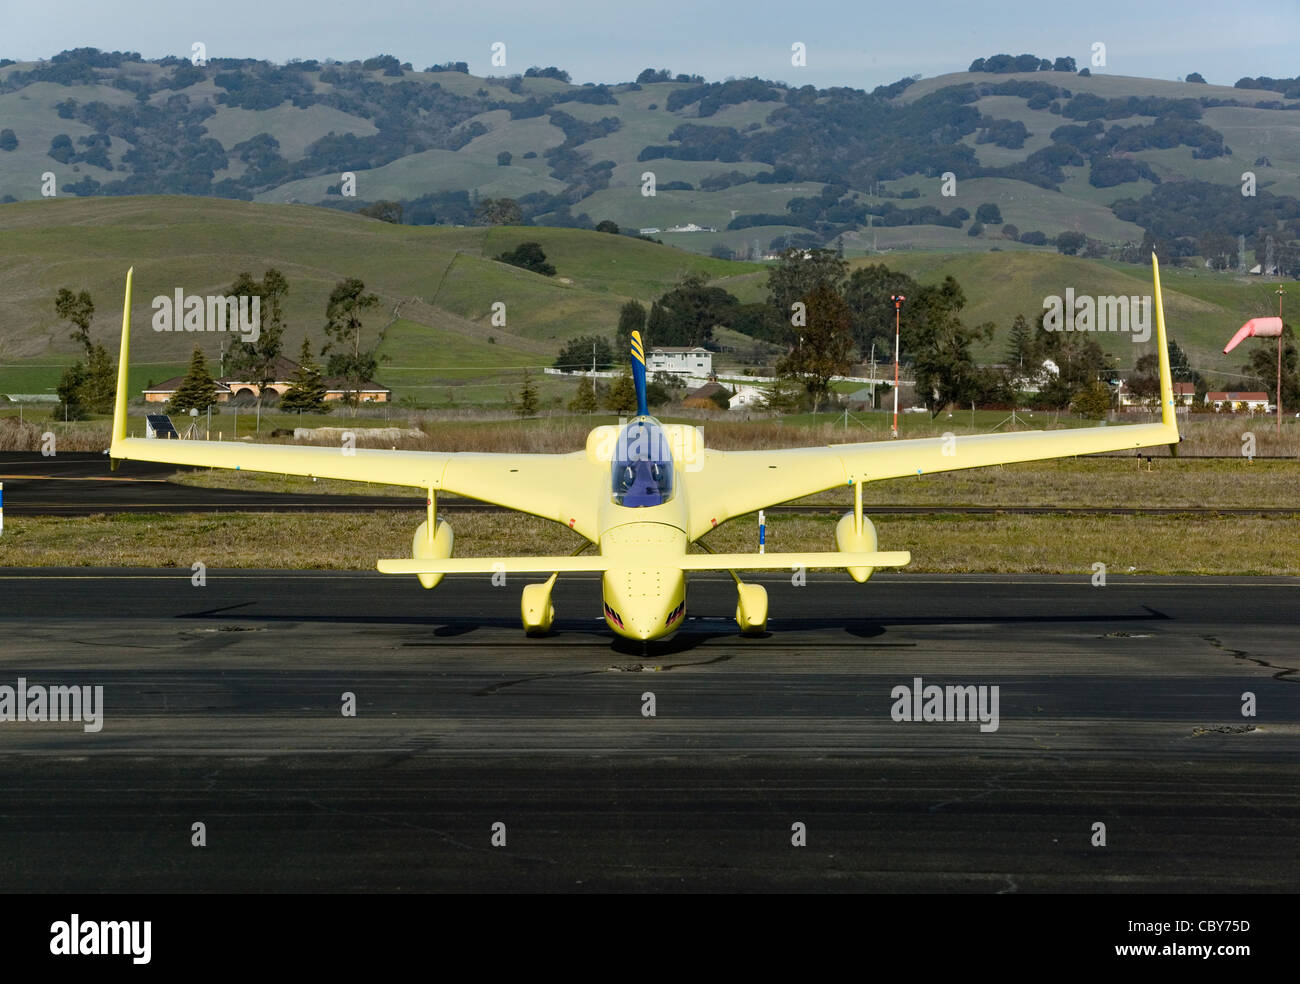 Rutan Long-EZ, aircraft parked at Petaluma airport California Stock Photo